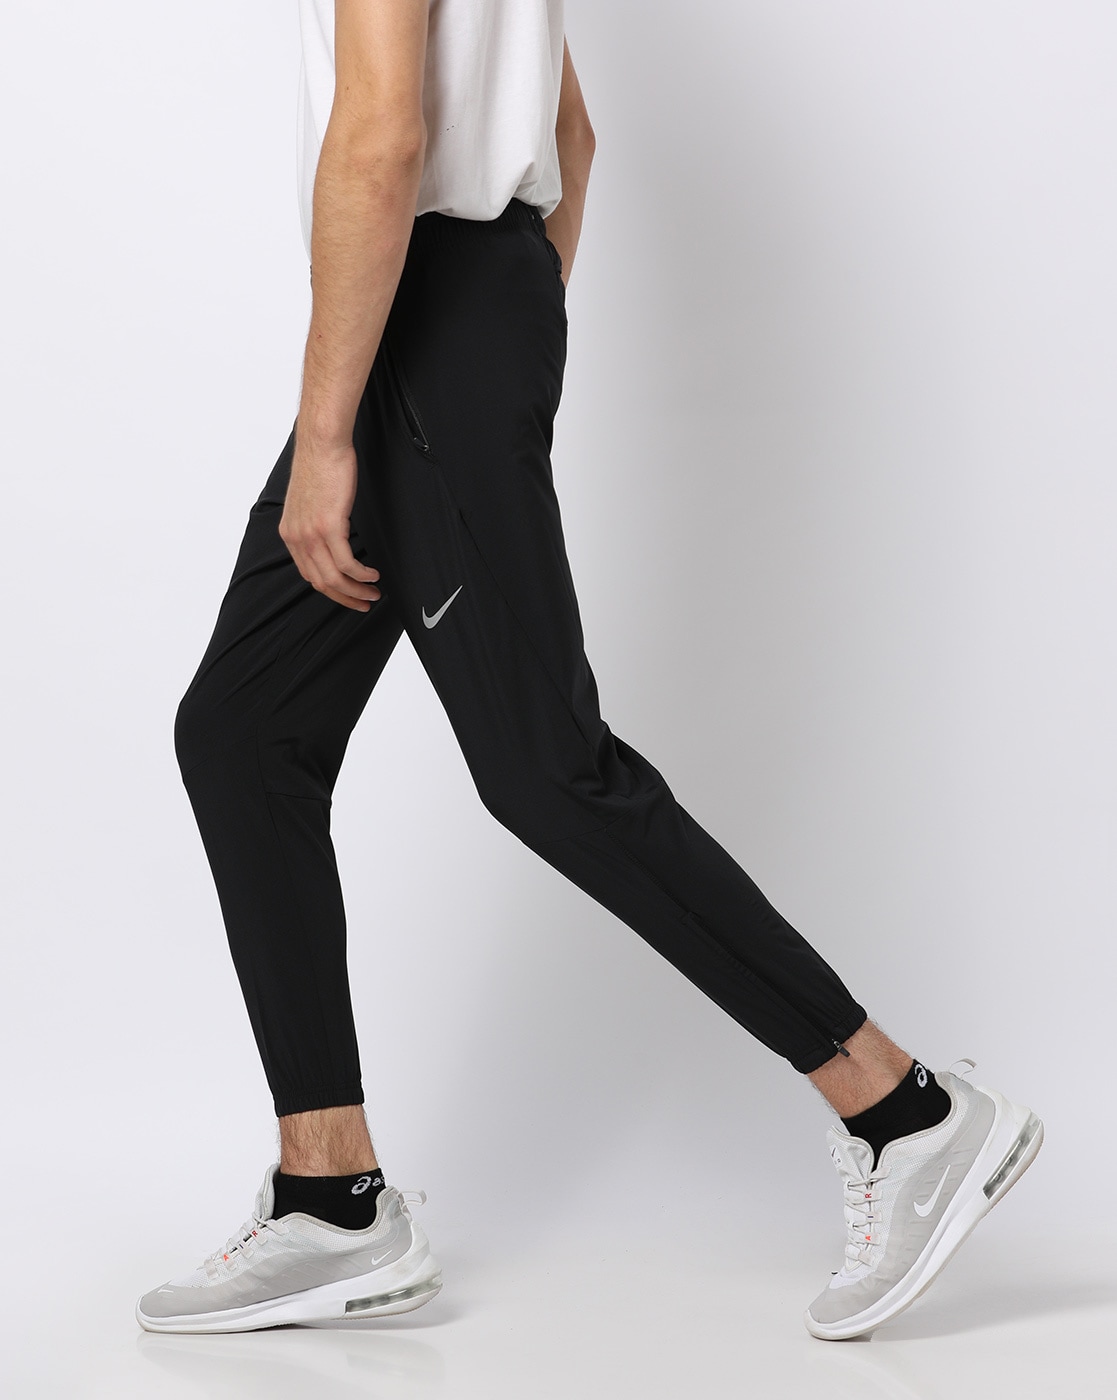 Buy Women Polyester StraightCut Gym Pants  Black Online  Decathlon